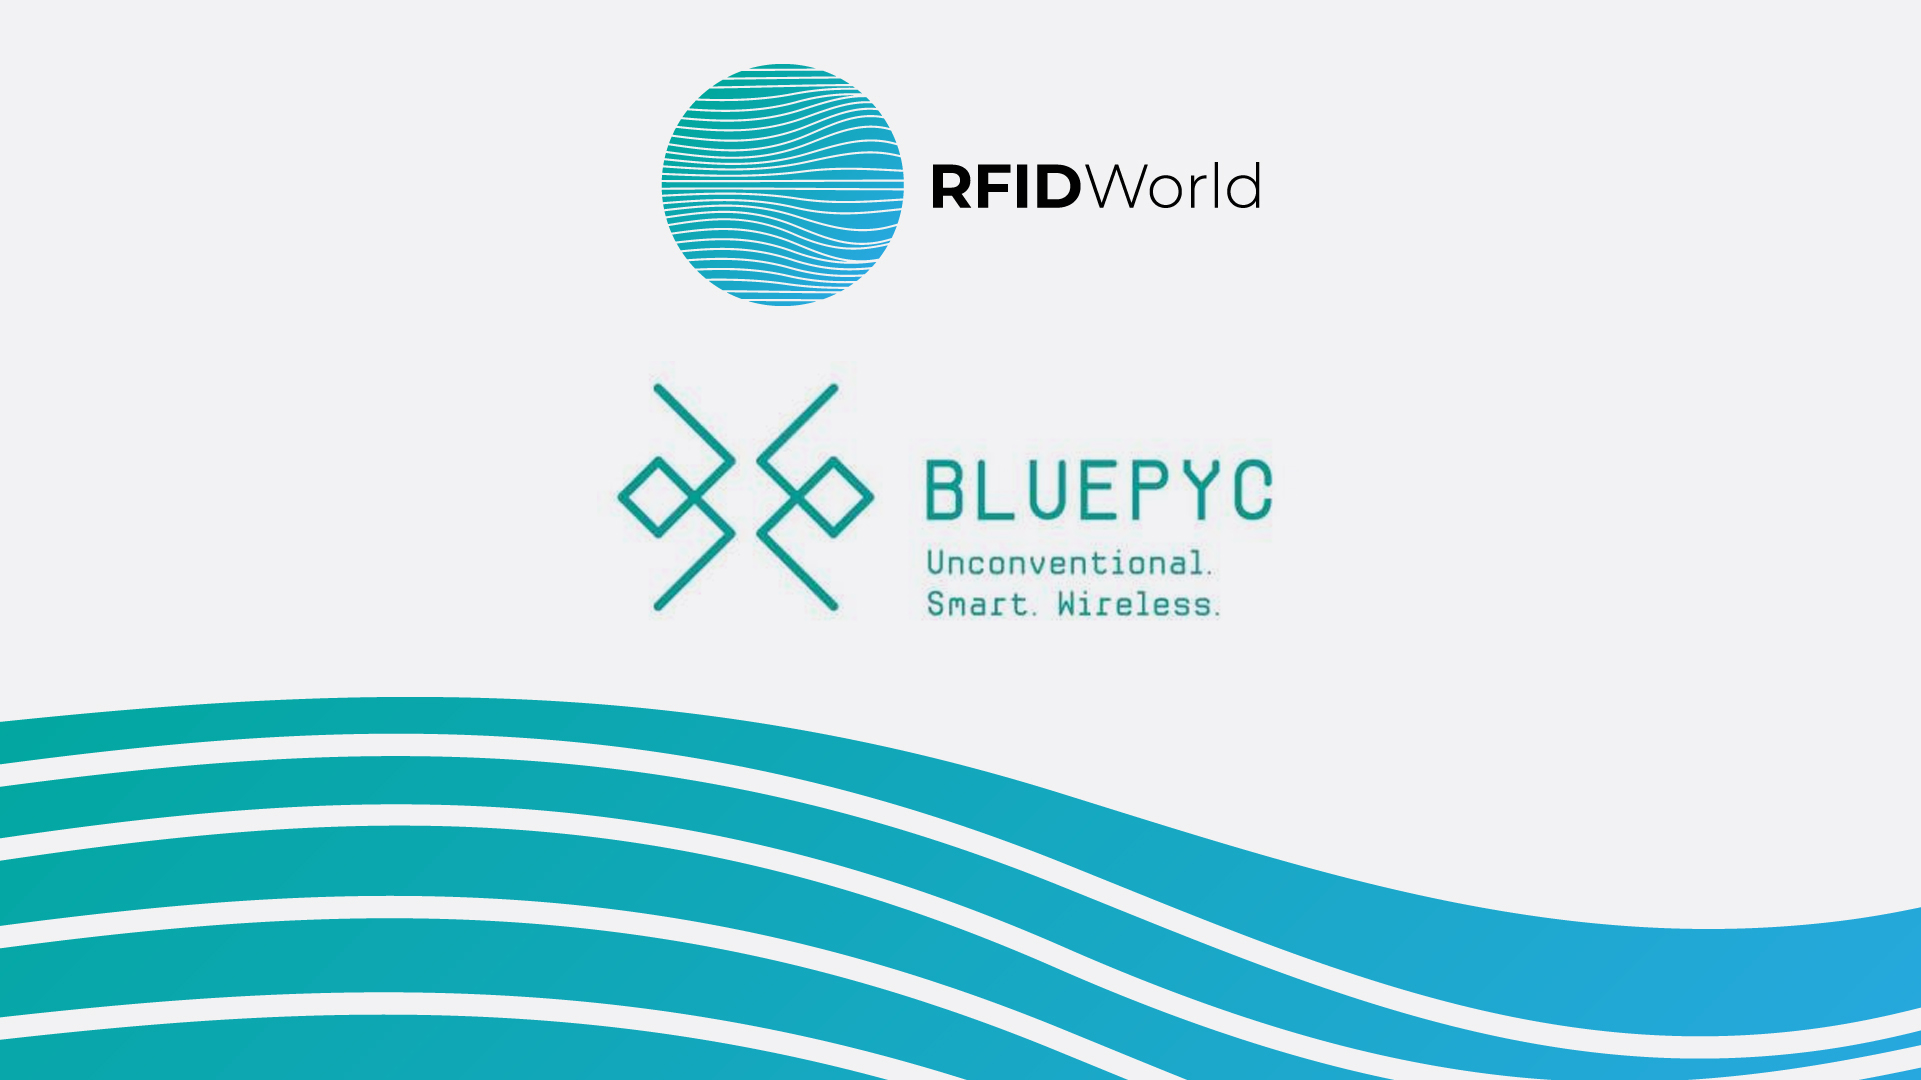 BLUEPYC RFID World